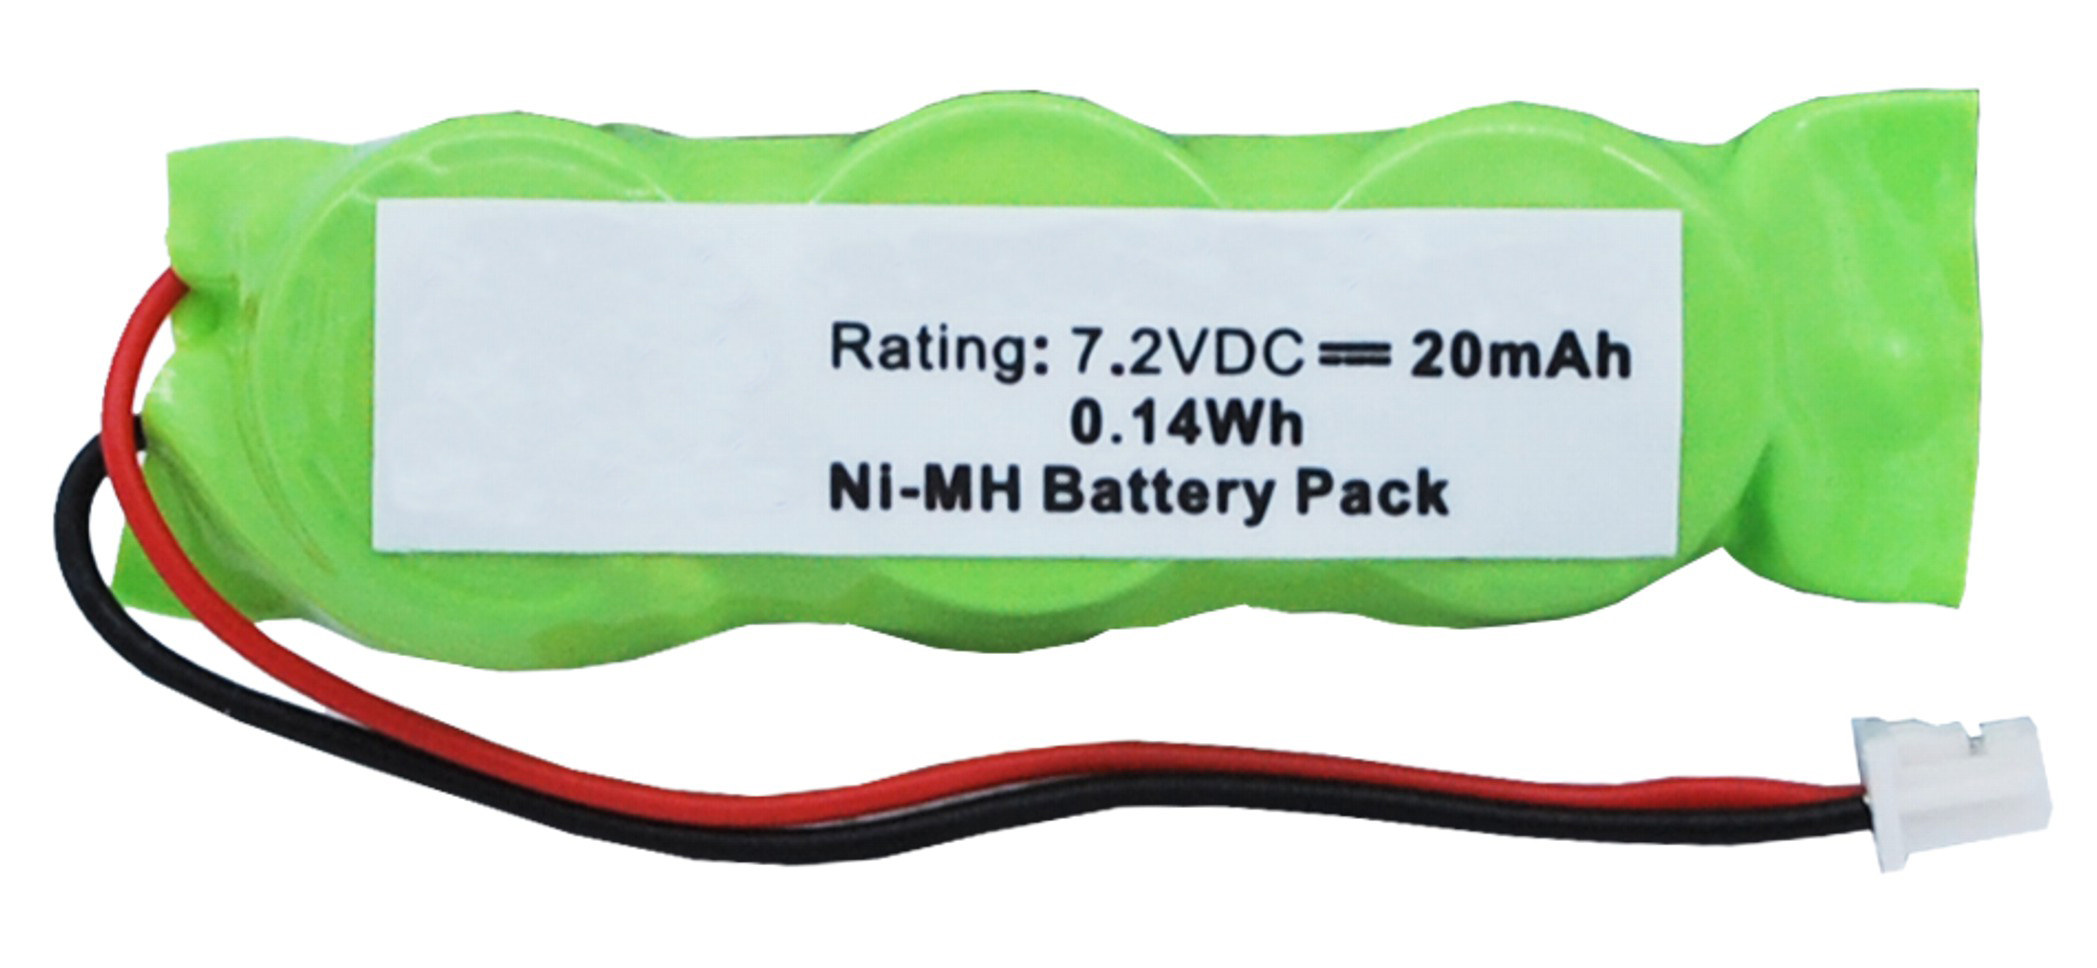 Synergy Digital CMOS/BIOS Battery, Compatible with Symbol OBEA000003B CMOS/BIOS Battery (Ni-MH, 7.2V, 20mAh)